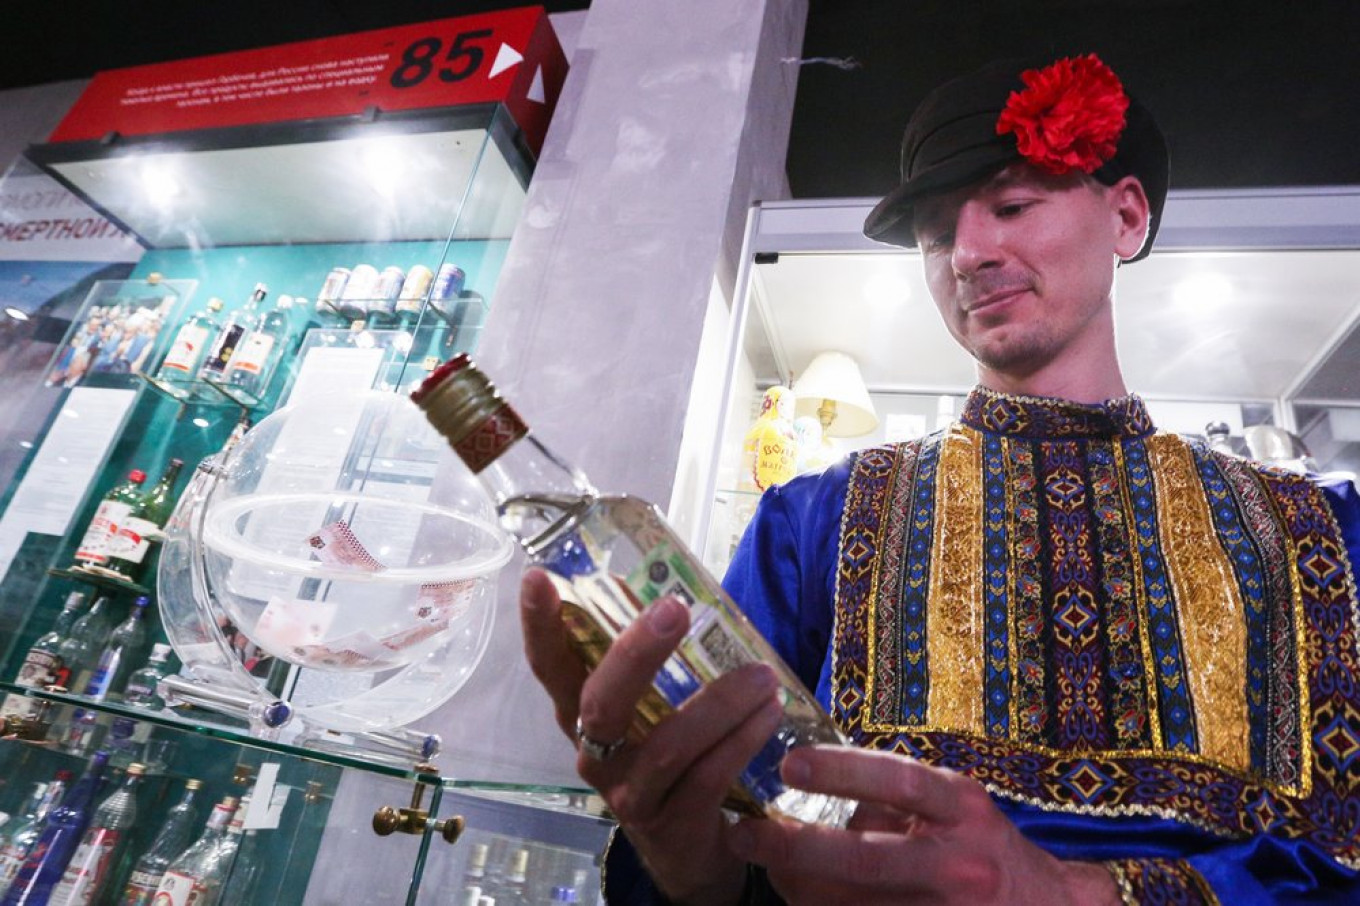 Alcohol Deaths Plummet as ‘Warmest Winter’ Hits Russia